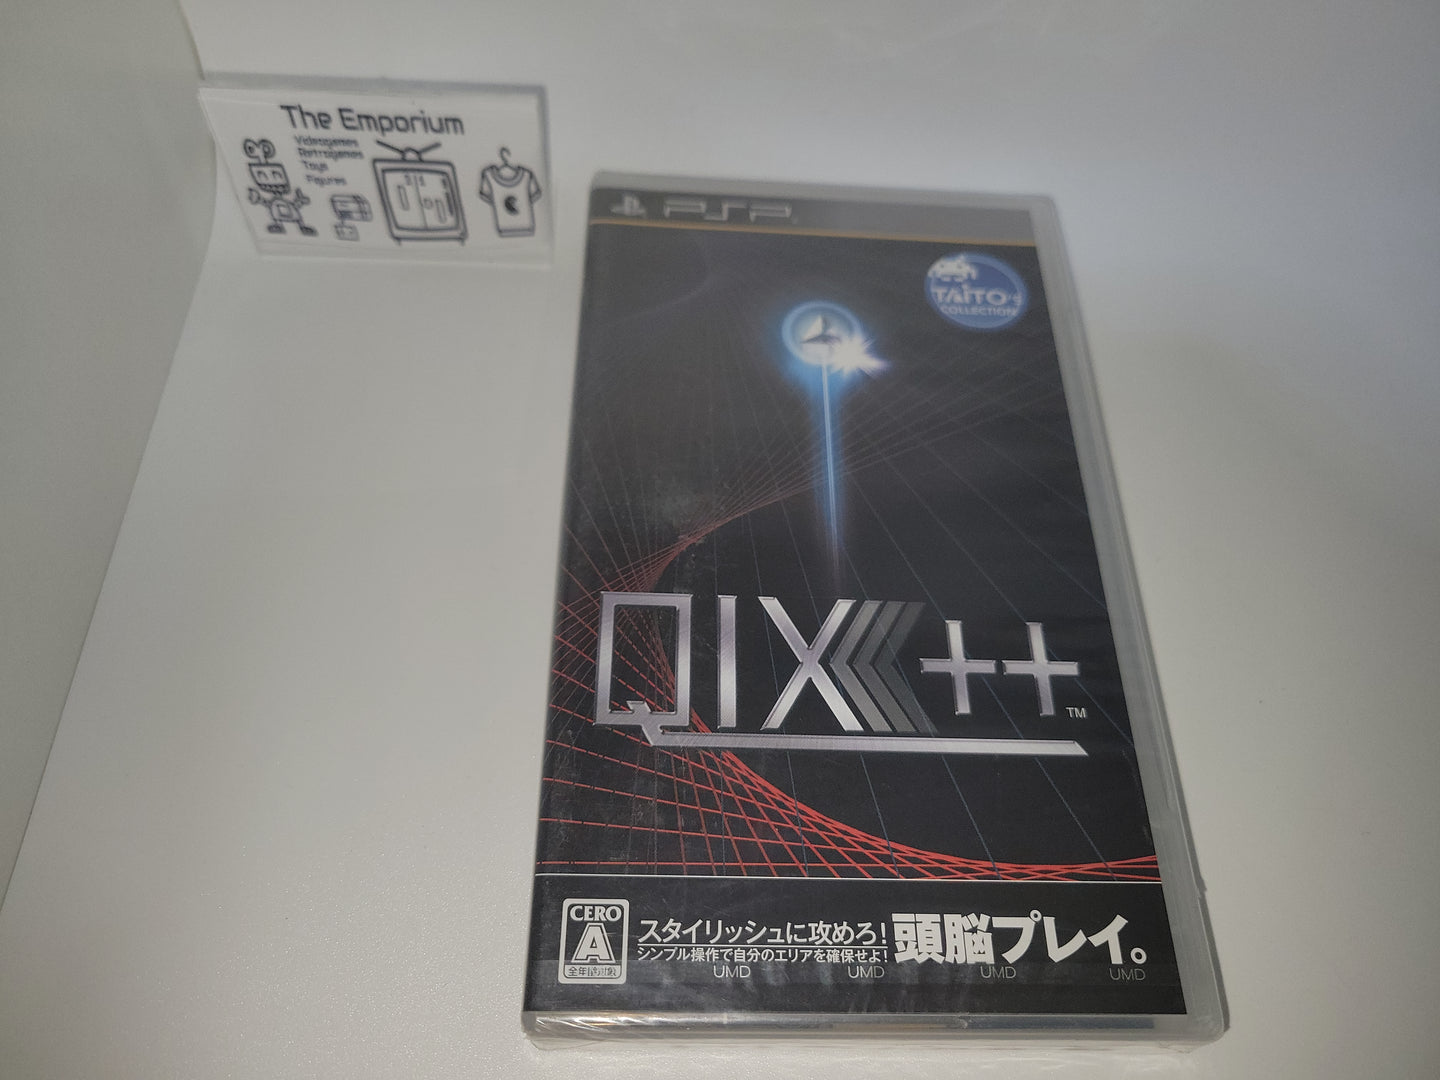 Qix++ - Sony PSP Playstation Portable